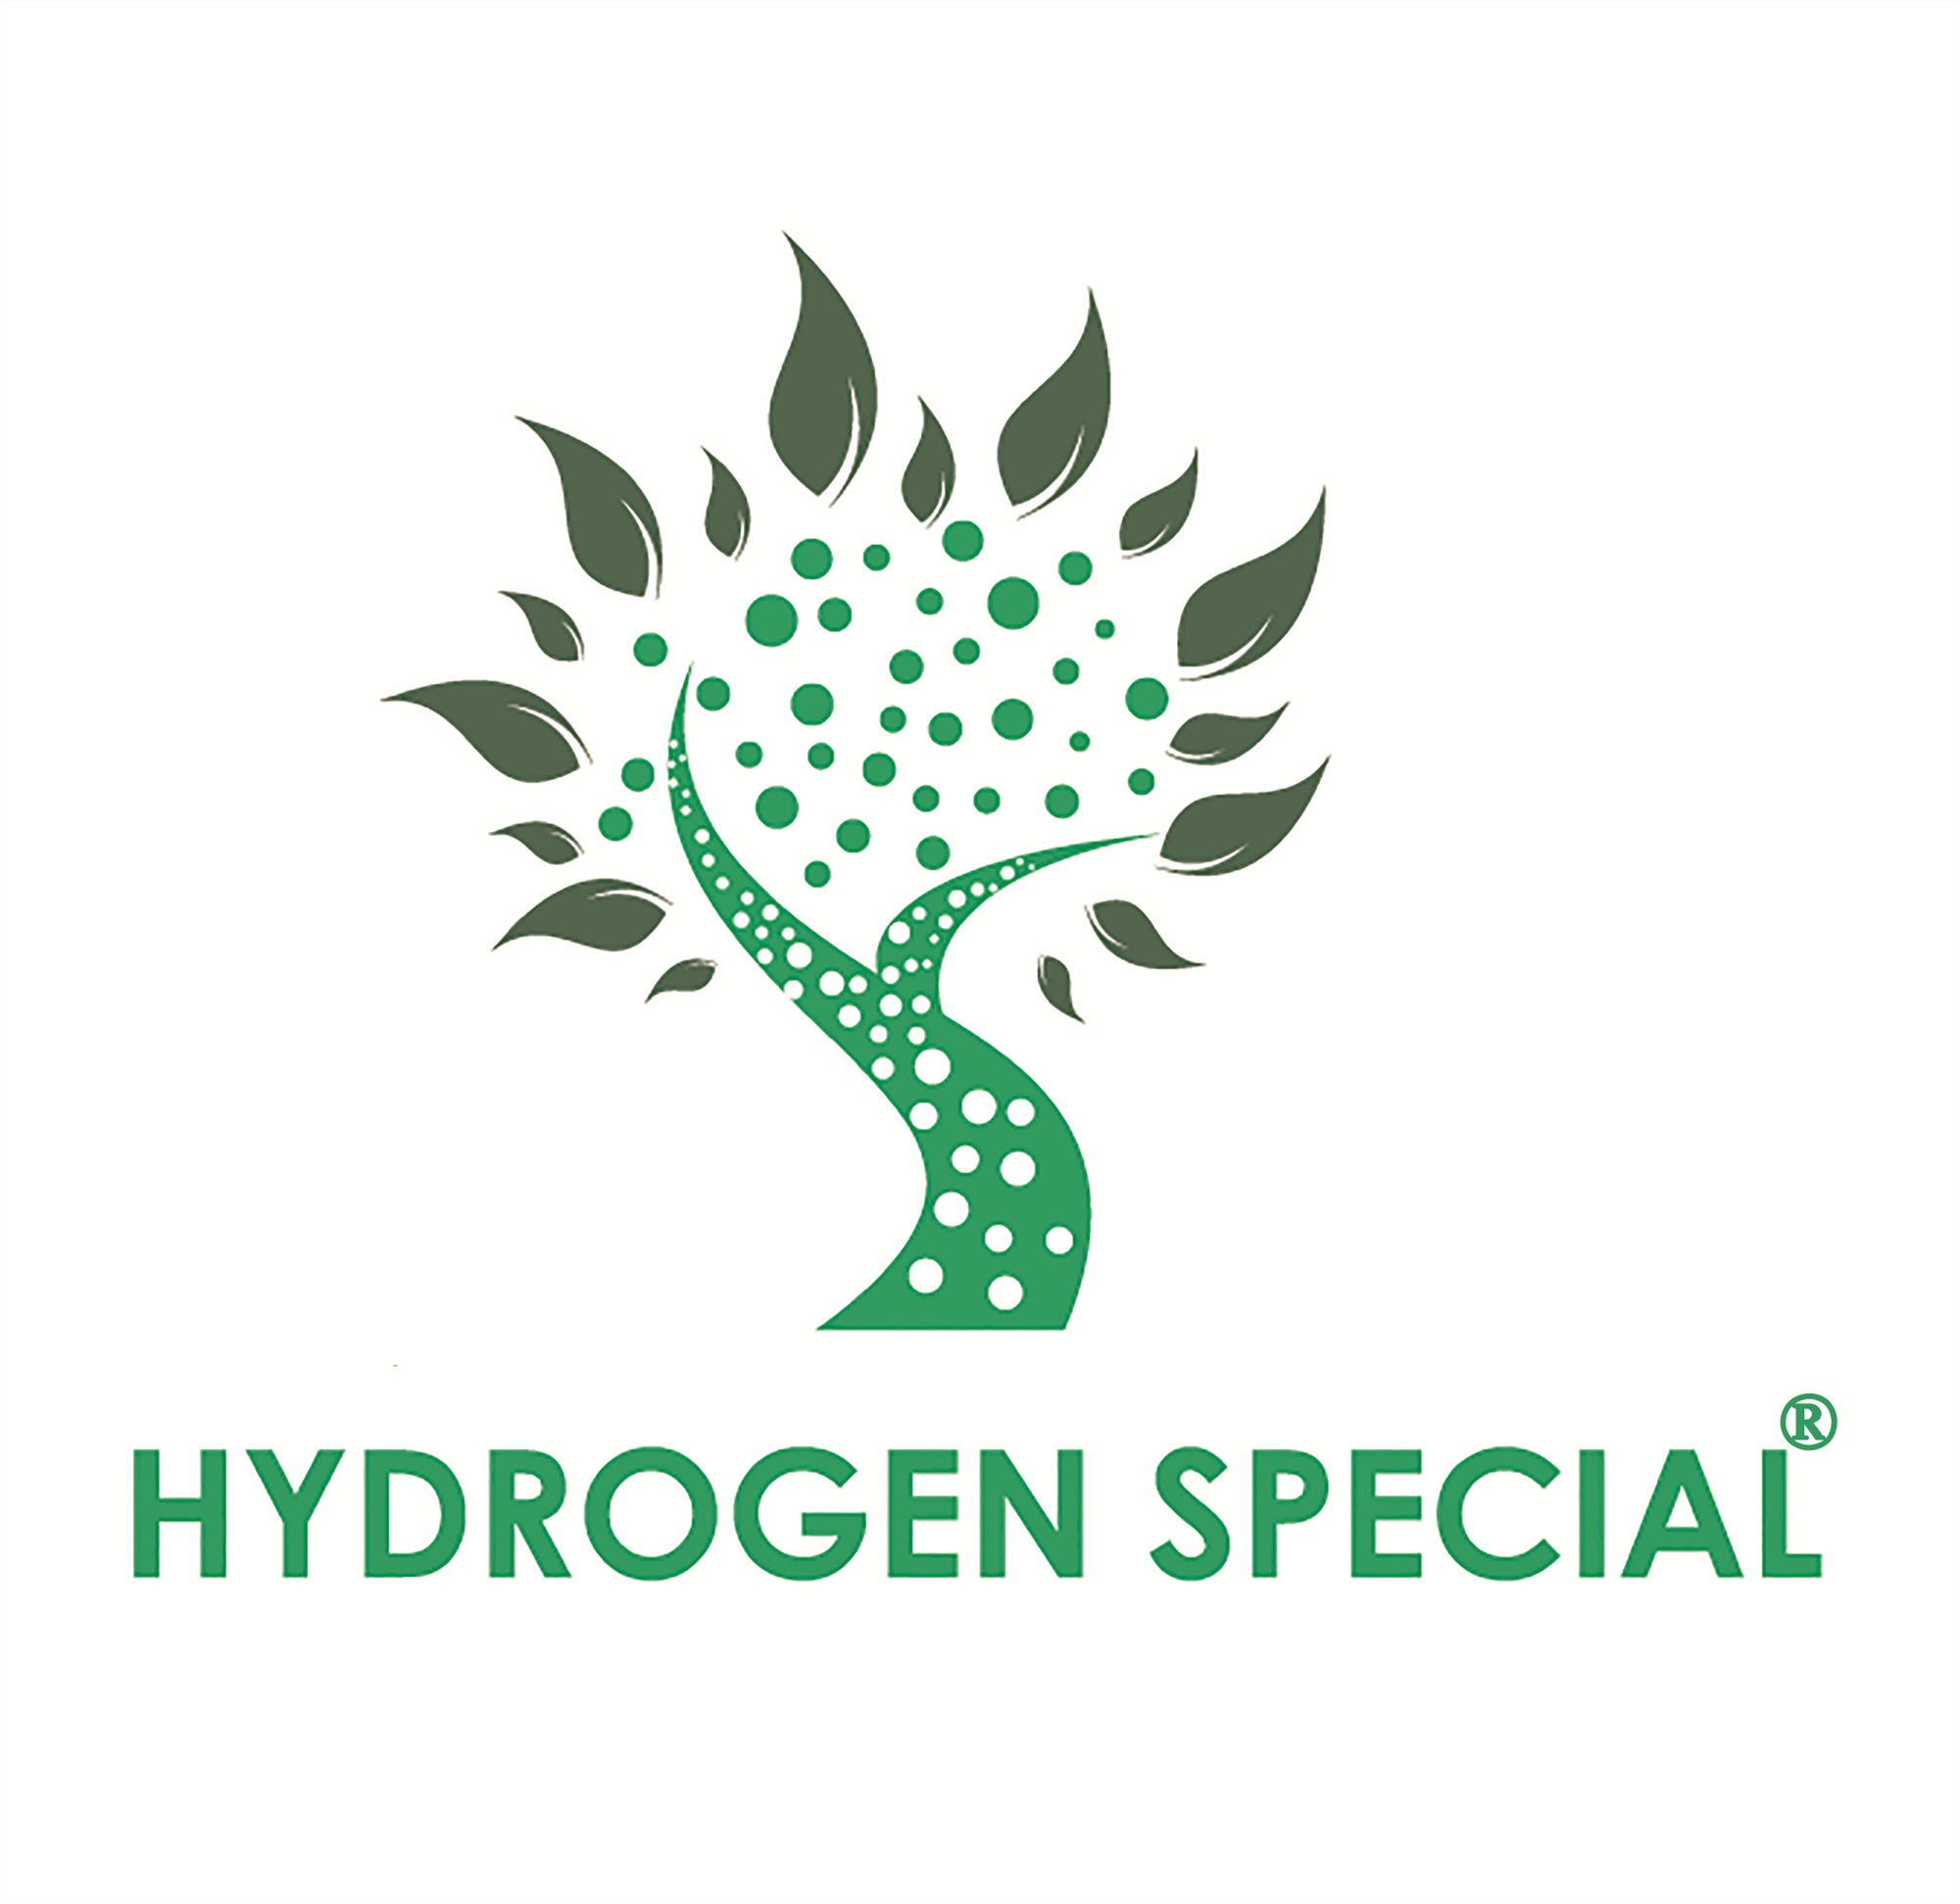 Hydrogen Special Inc.